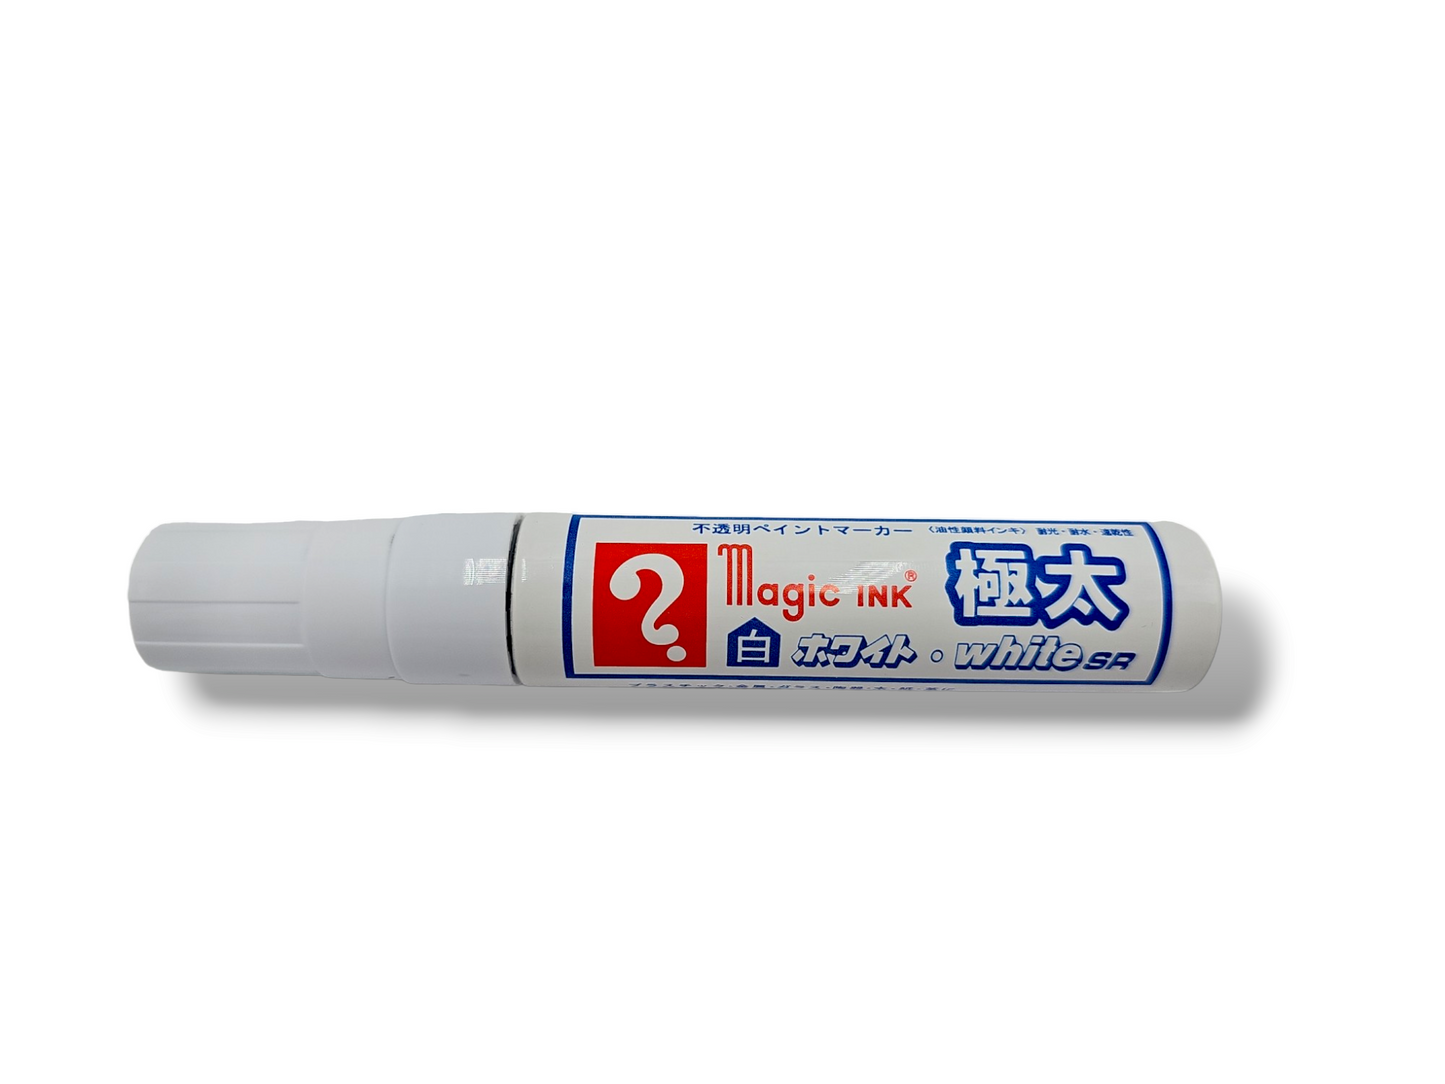 Magic Ink Jumbo Broad Tip Oil Based Ink Marker White